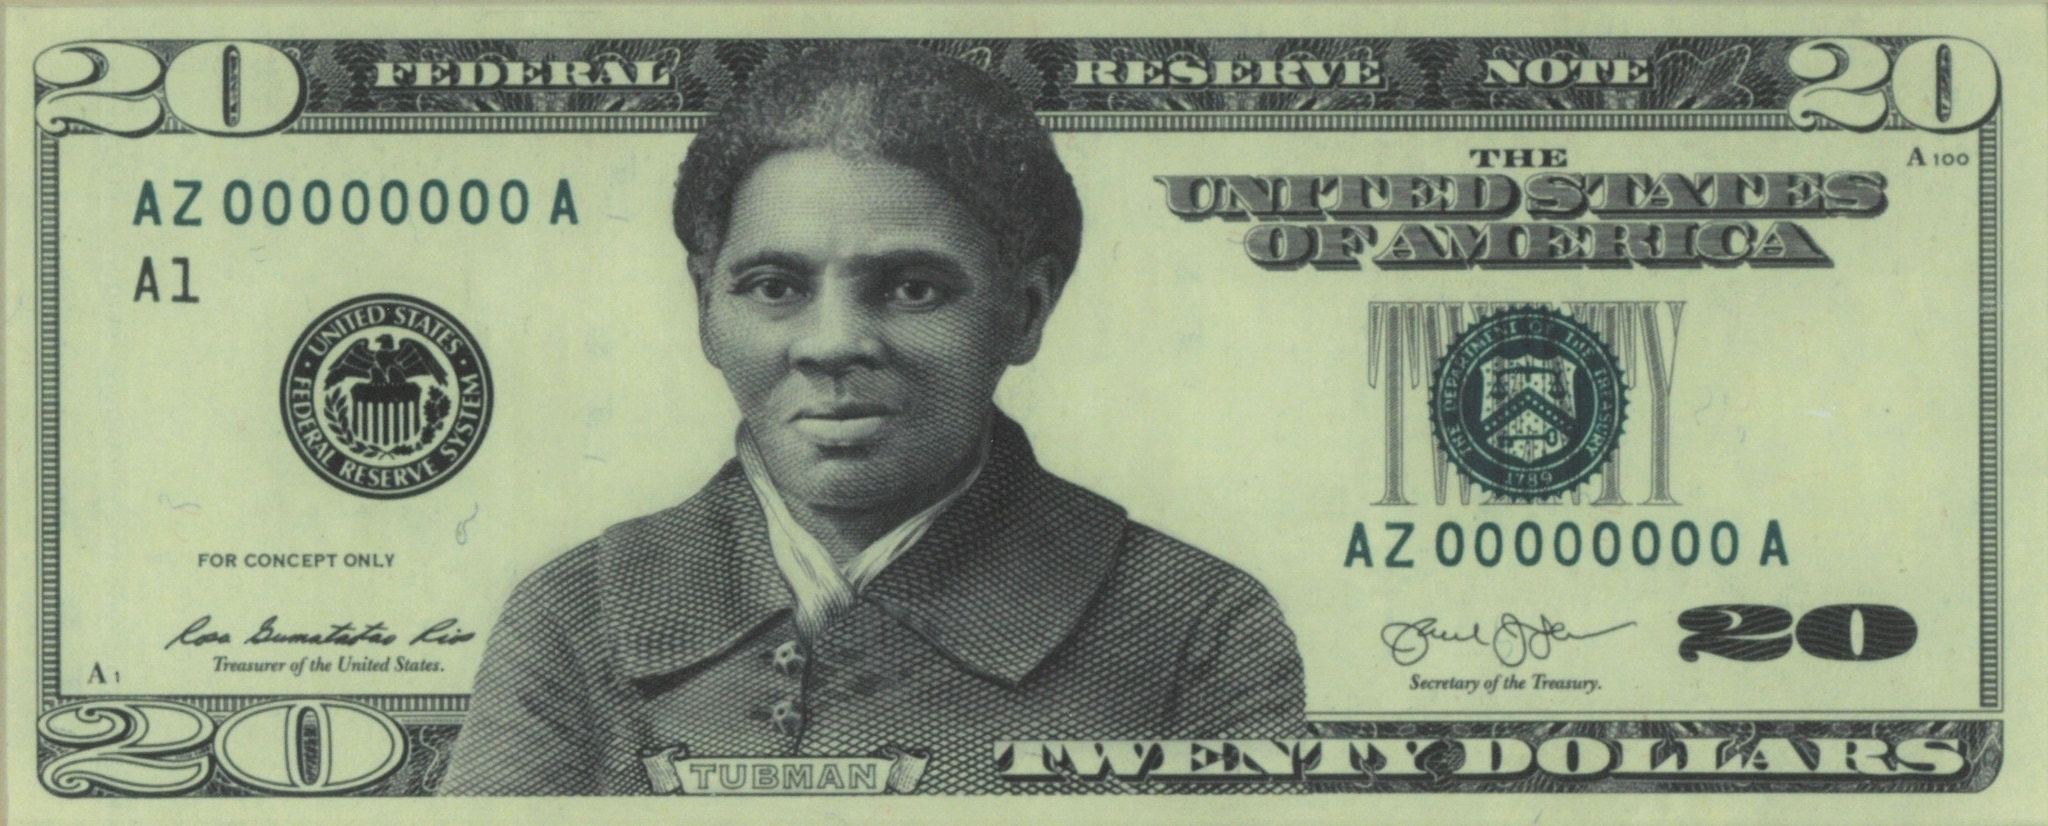 The real reason Trump won’t put Harriet Tubman on $20 bill